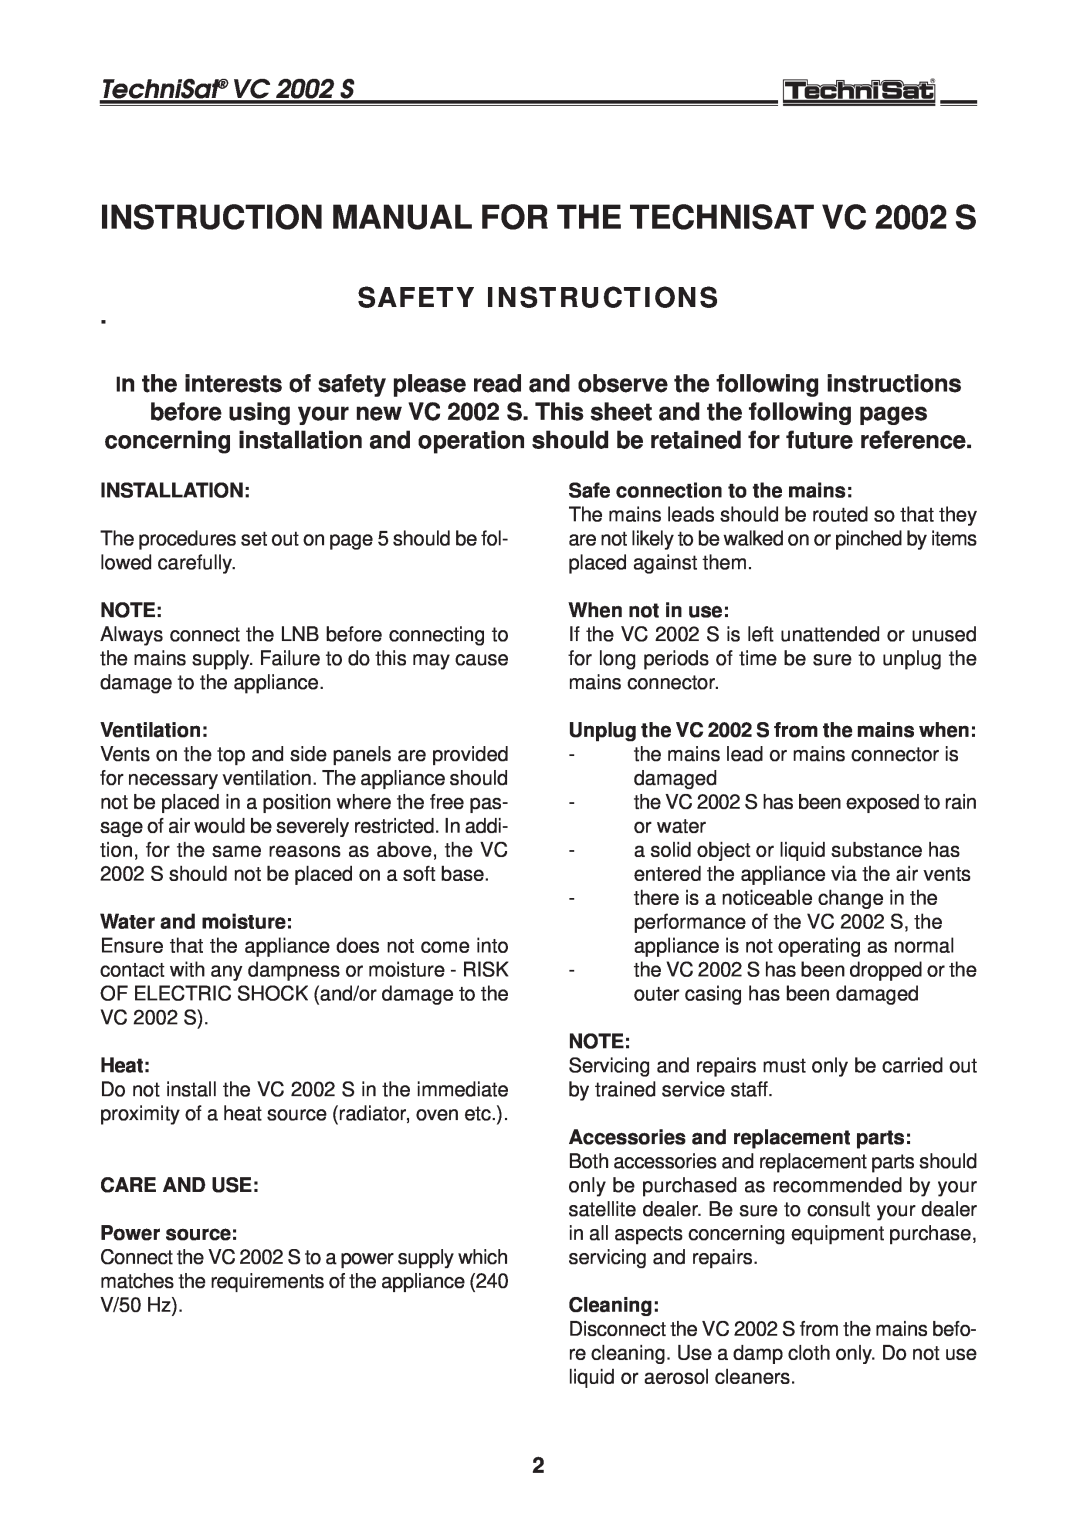 TechniSat manual Safety Instructions, TechniSat VC 2002 S 